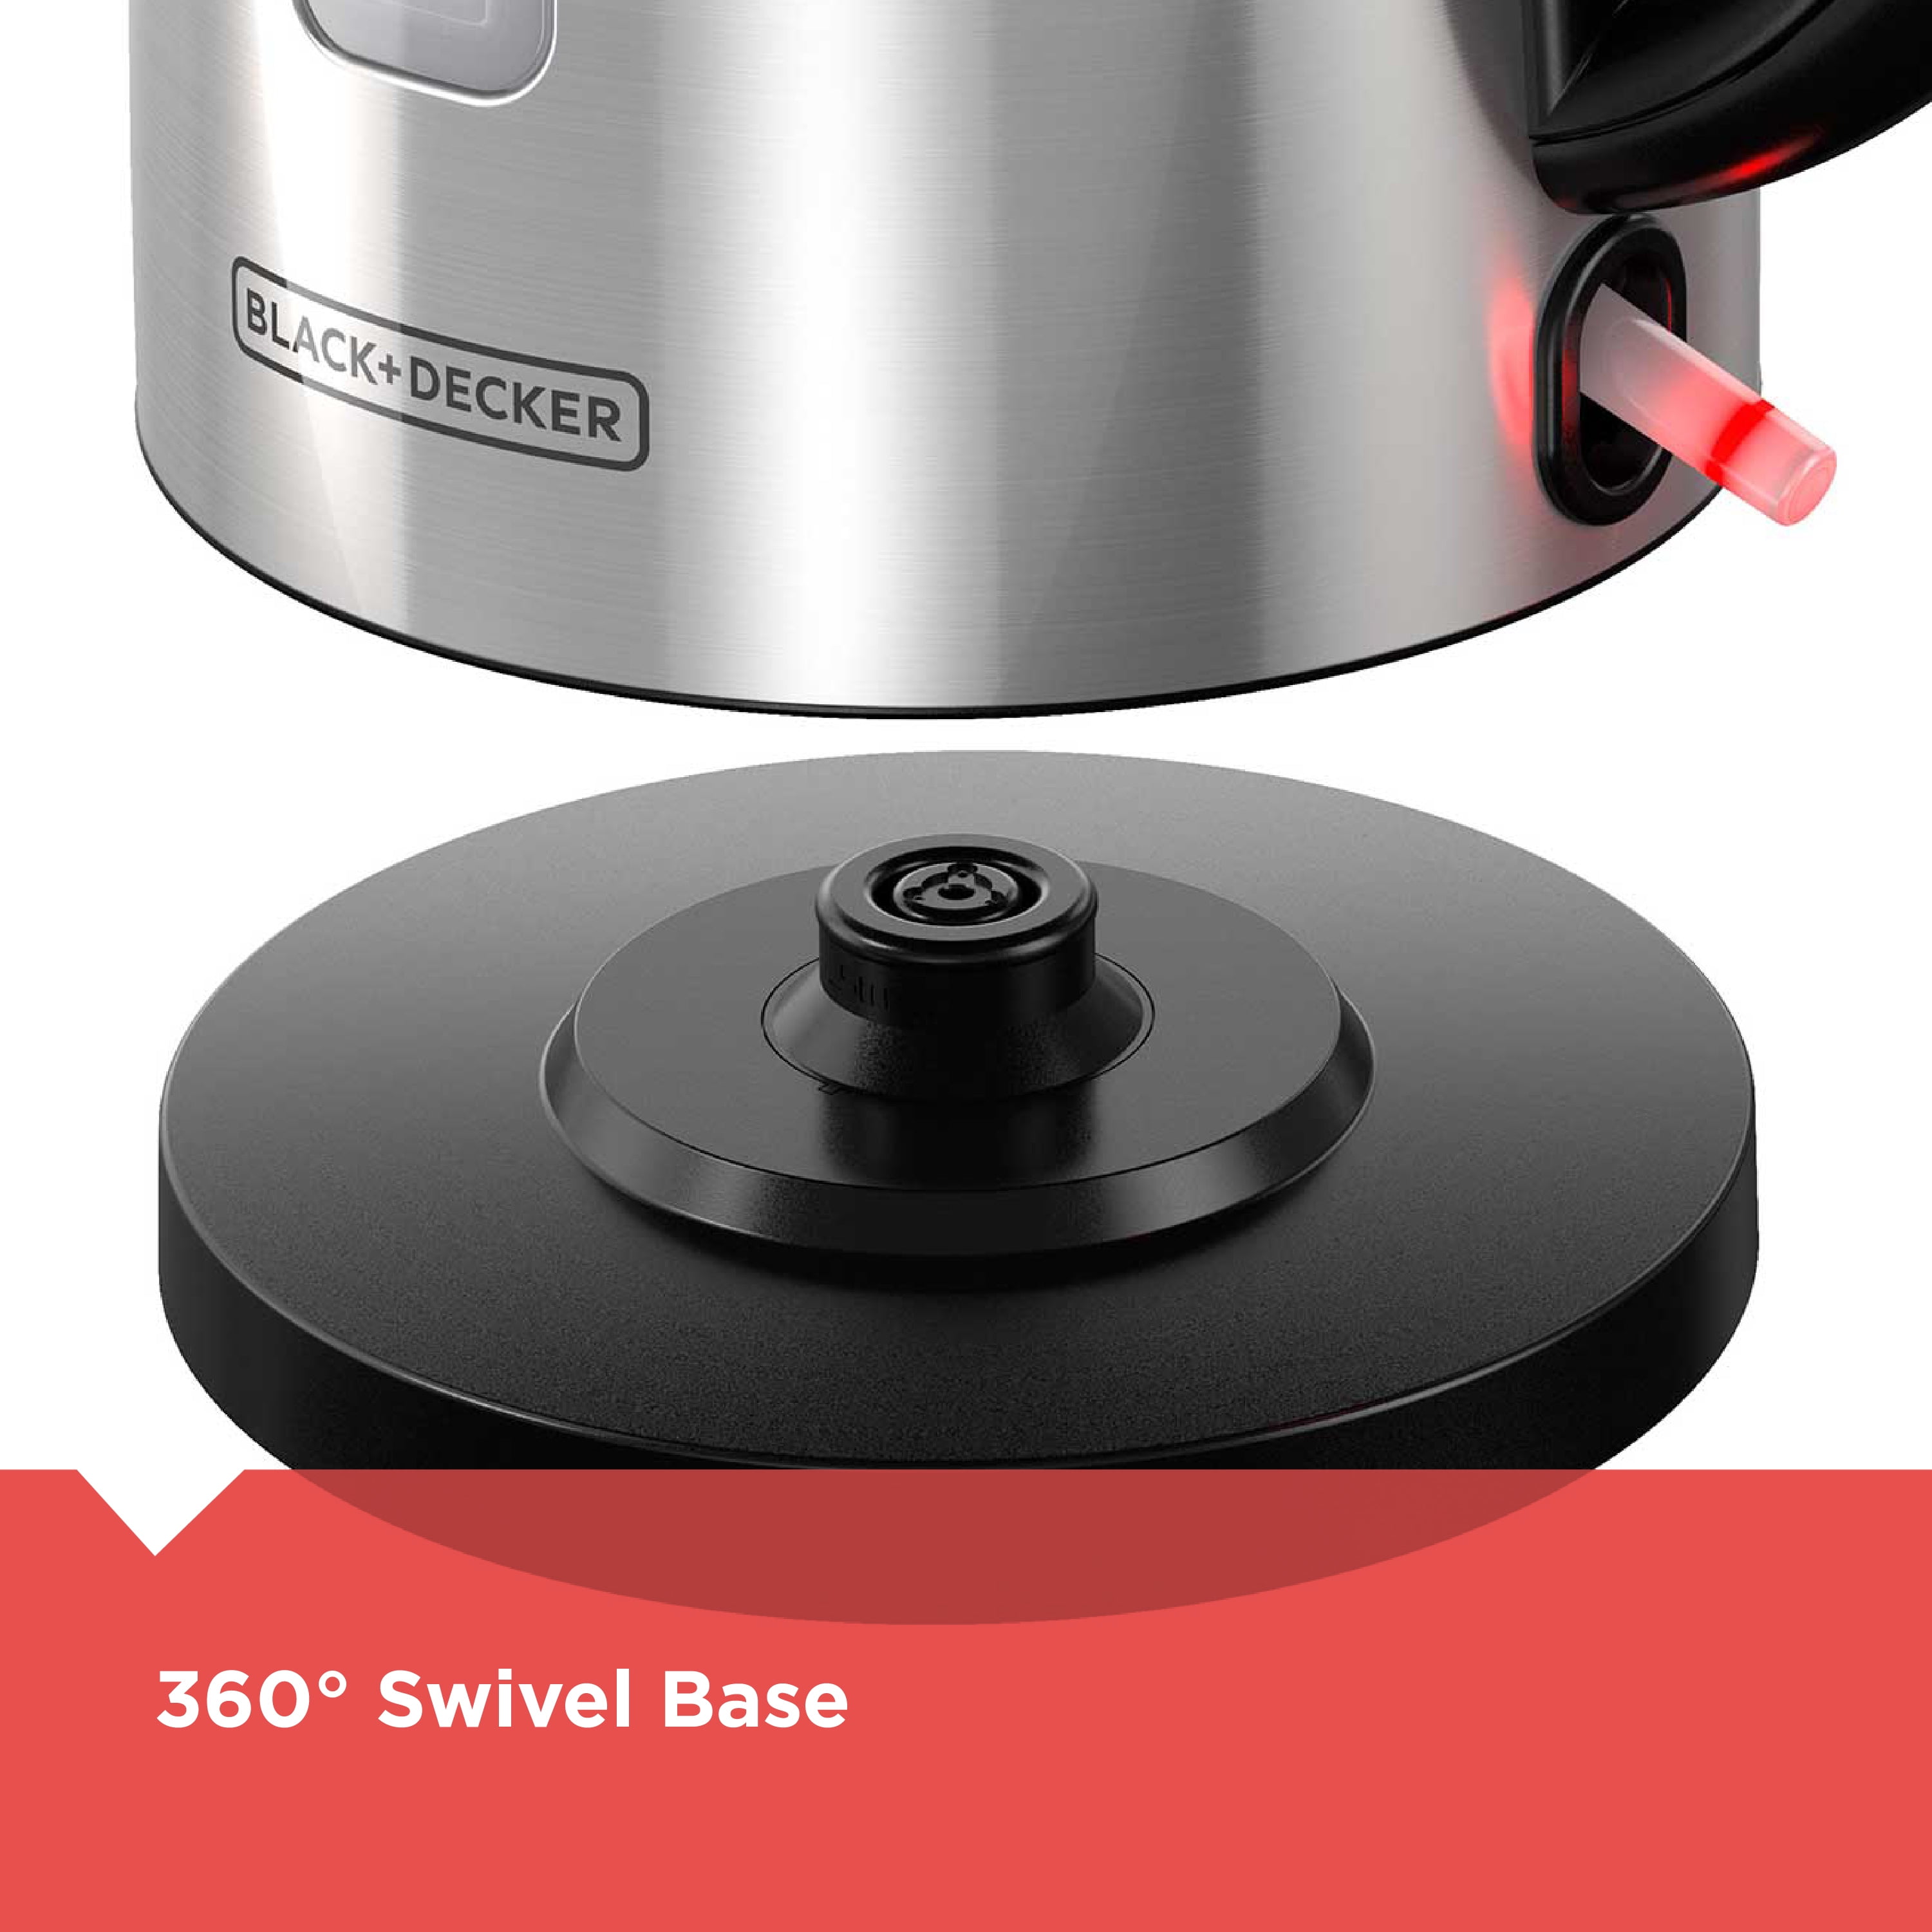 Save SR 80 Black and Decker kettle 1.7 liters 2200 watts steel